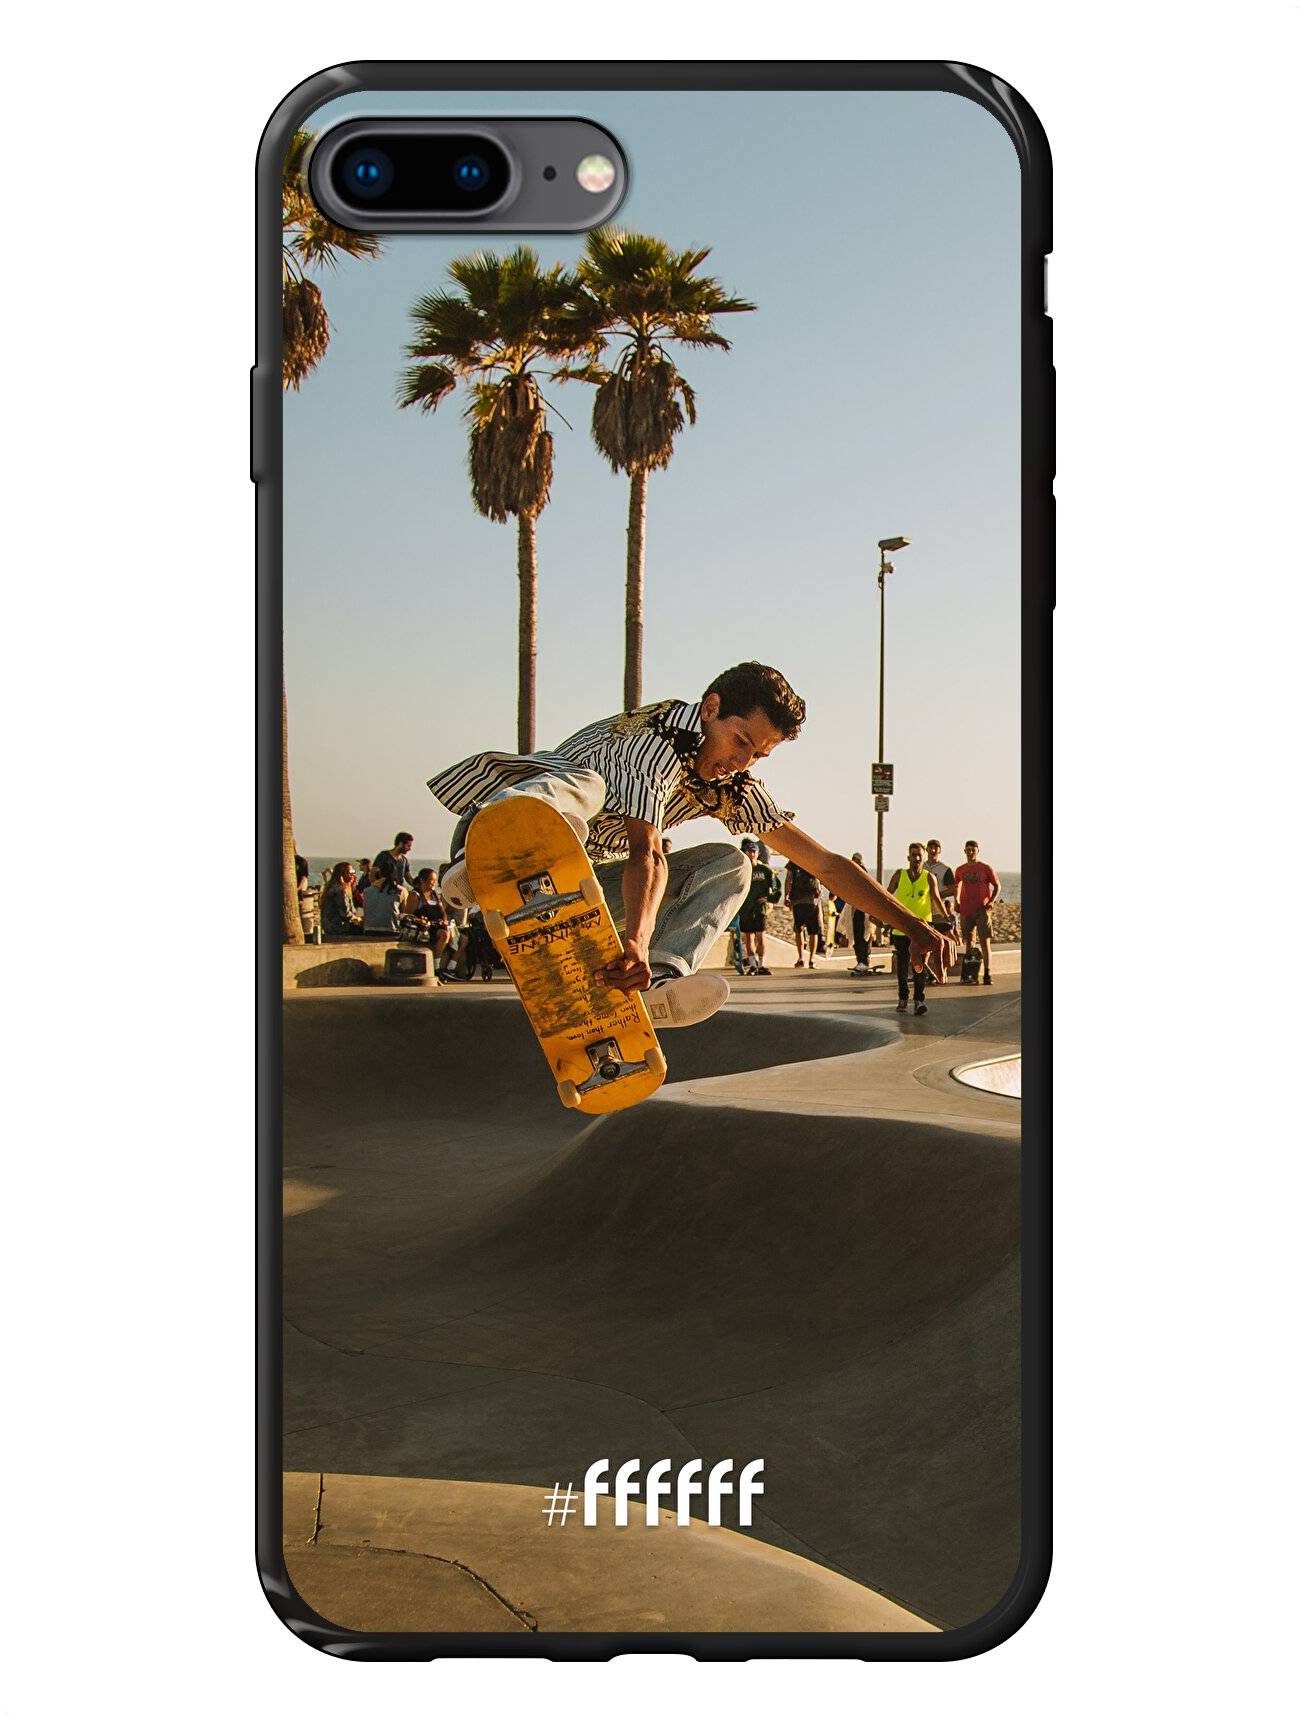 Let's Skate iPhone 8 Plus